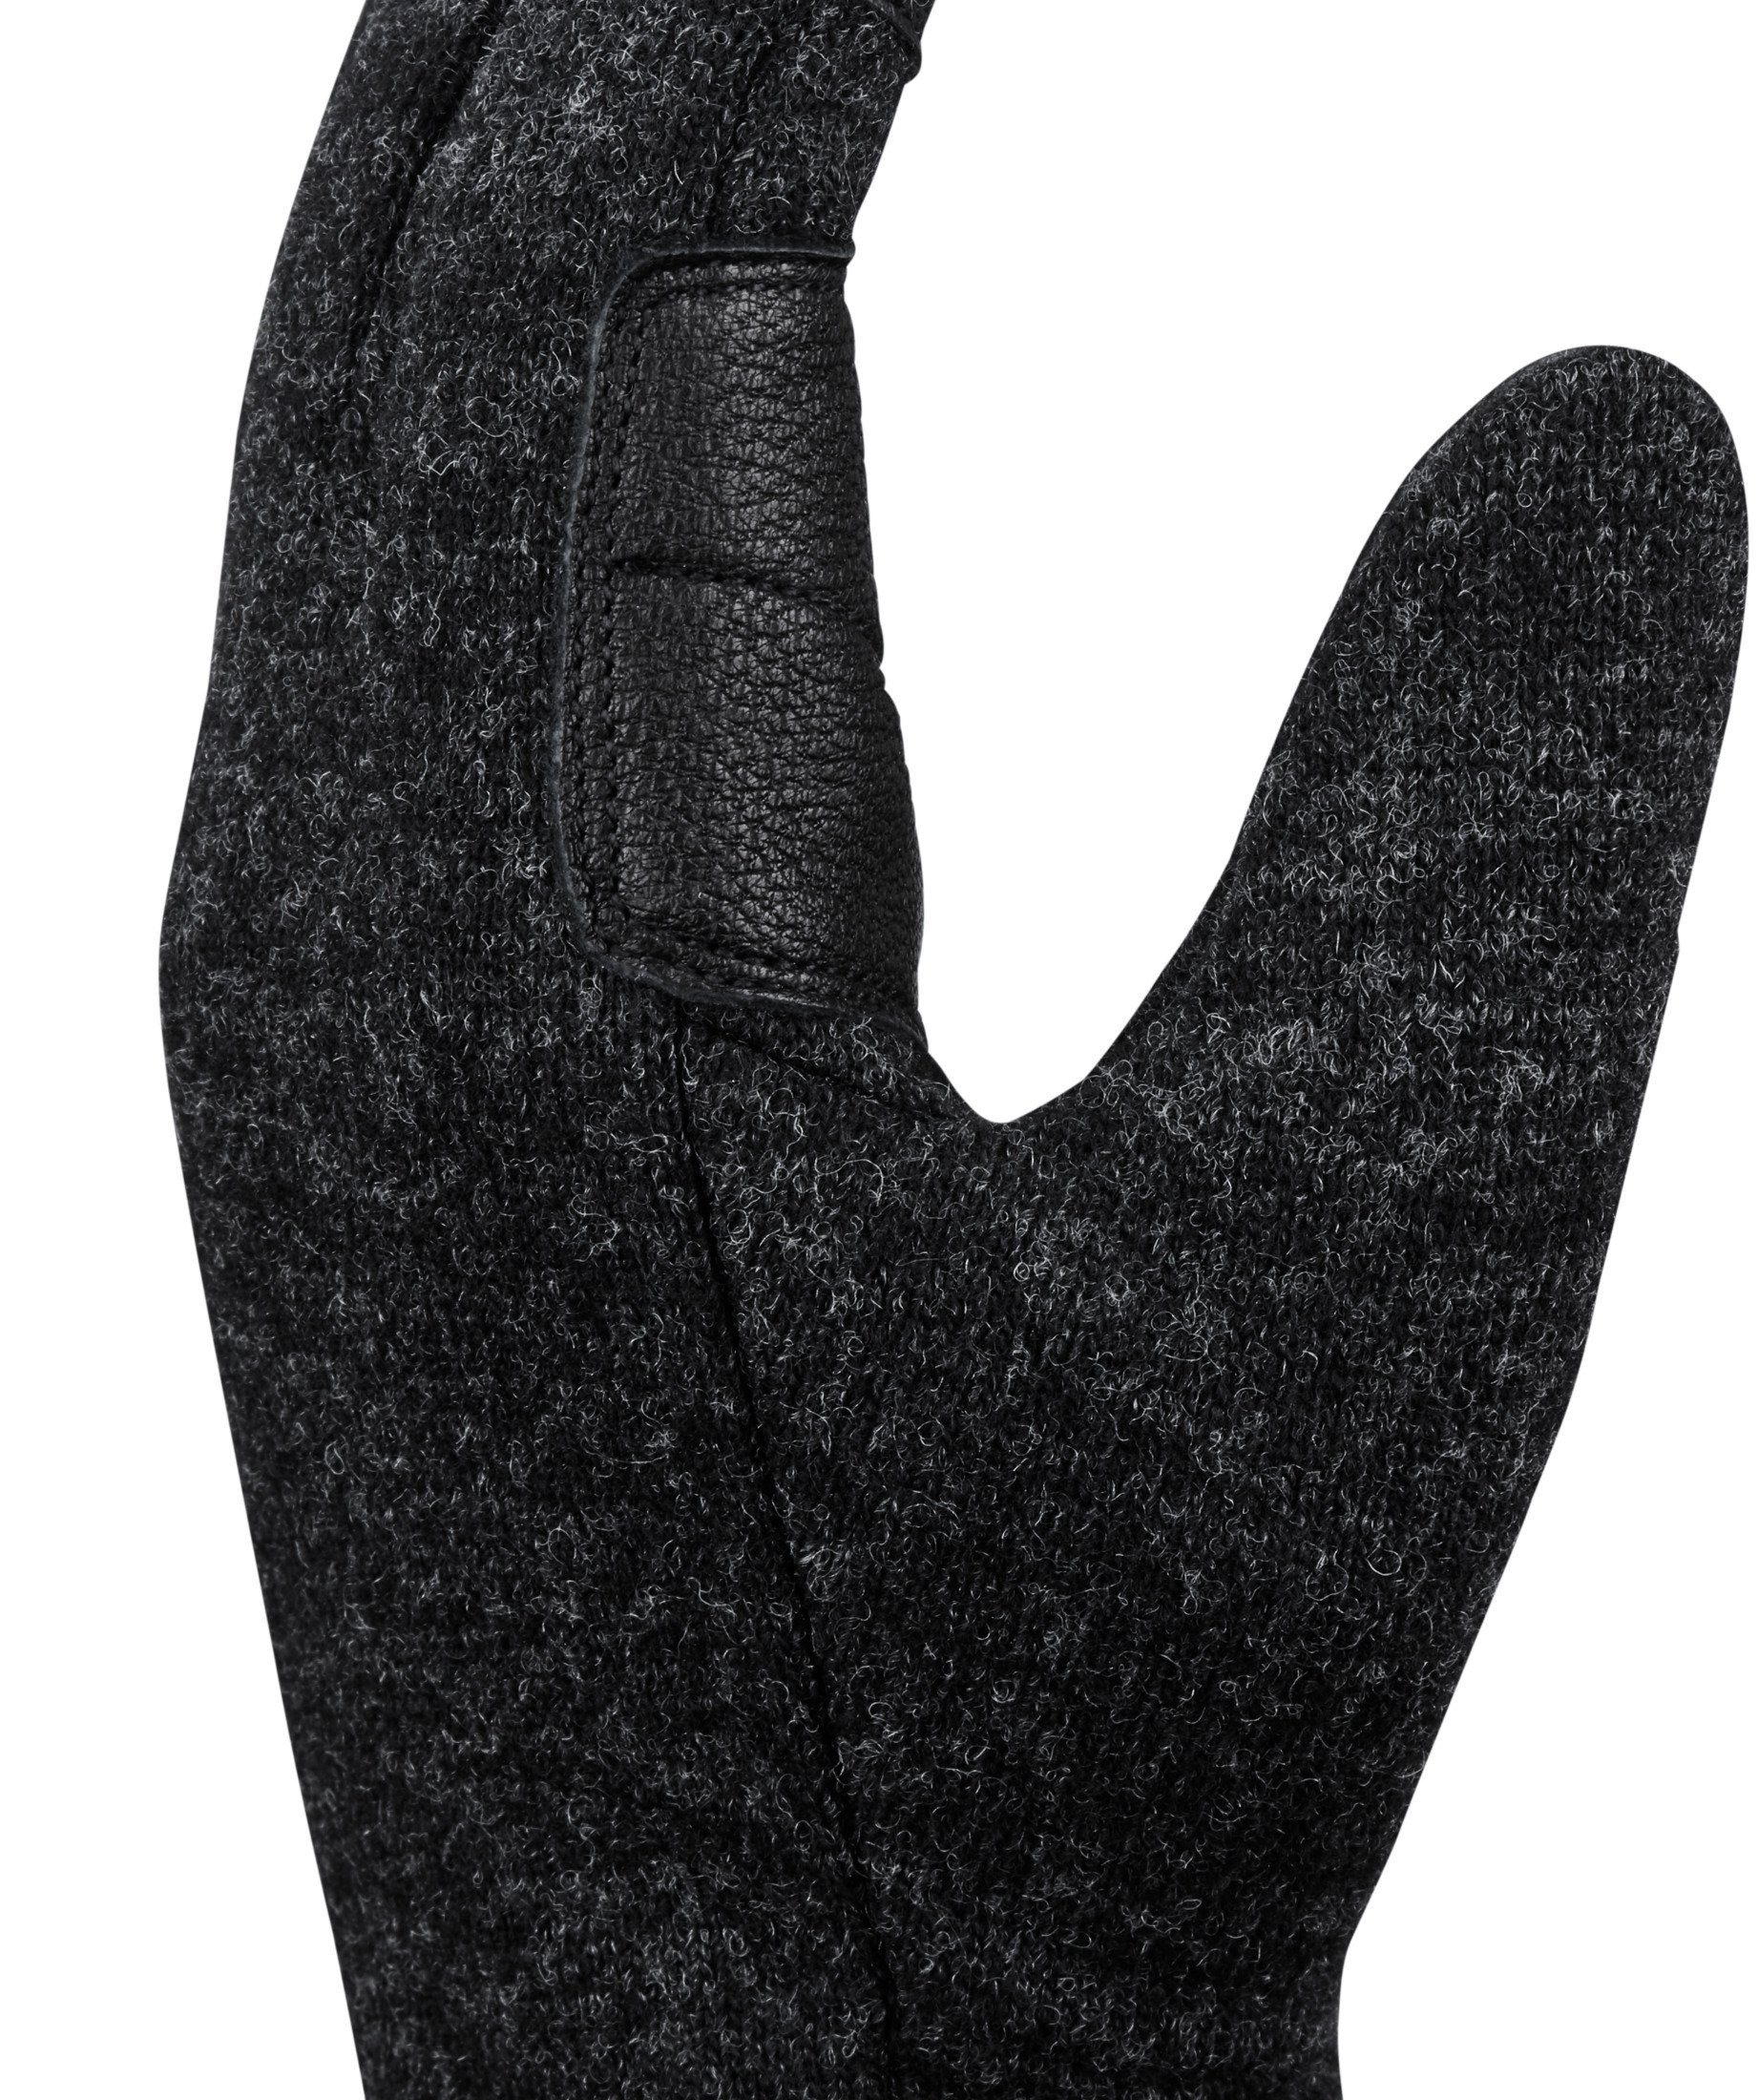 Mammut Multisporthandschuhe Passion Glove Passion mélange black Glove